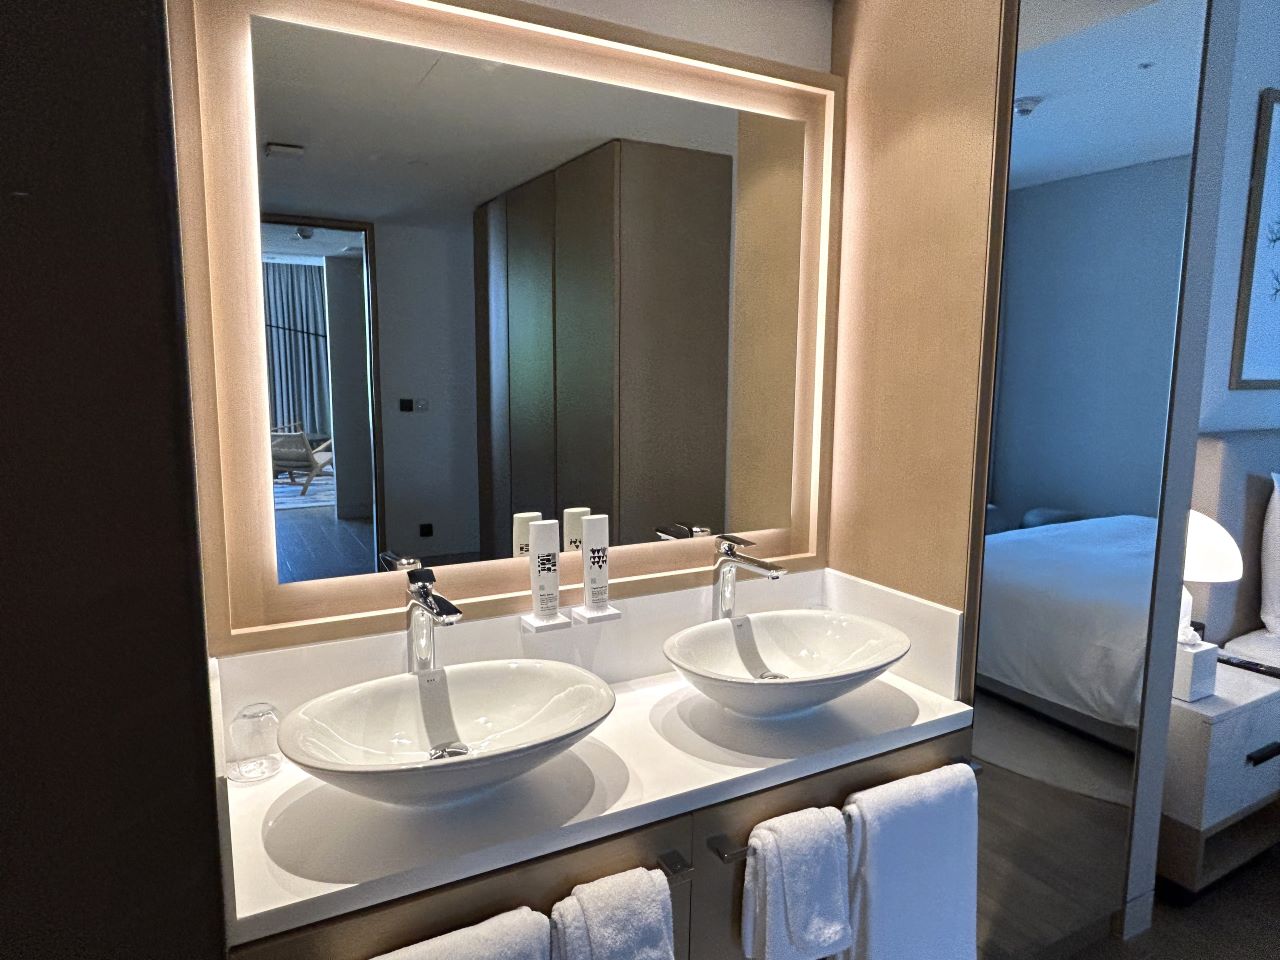 Mövenpick Resort Al Marjan Bathroom Sink